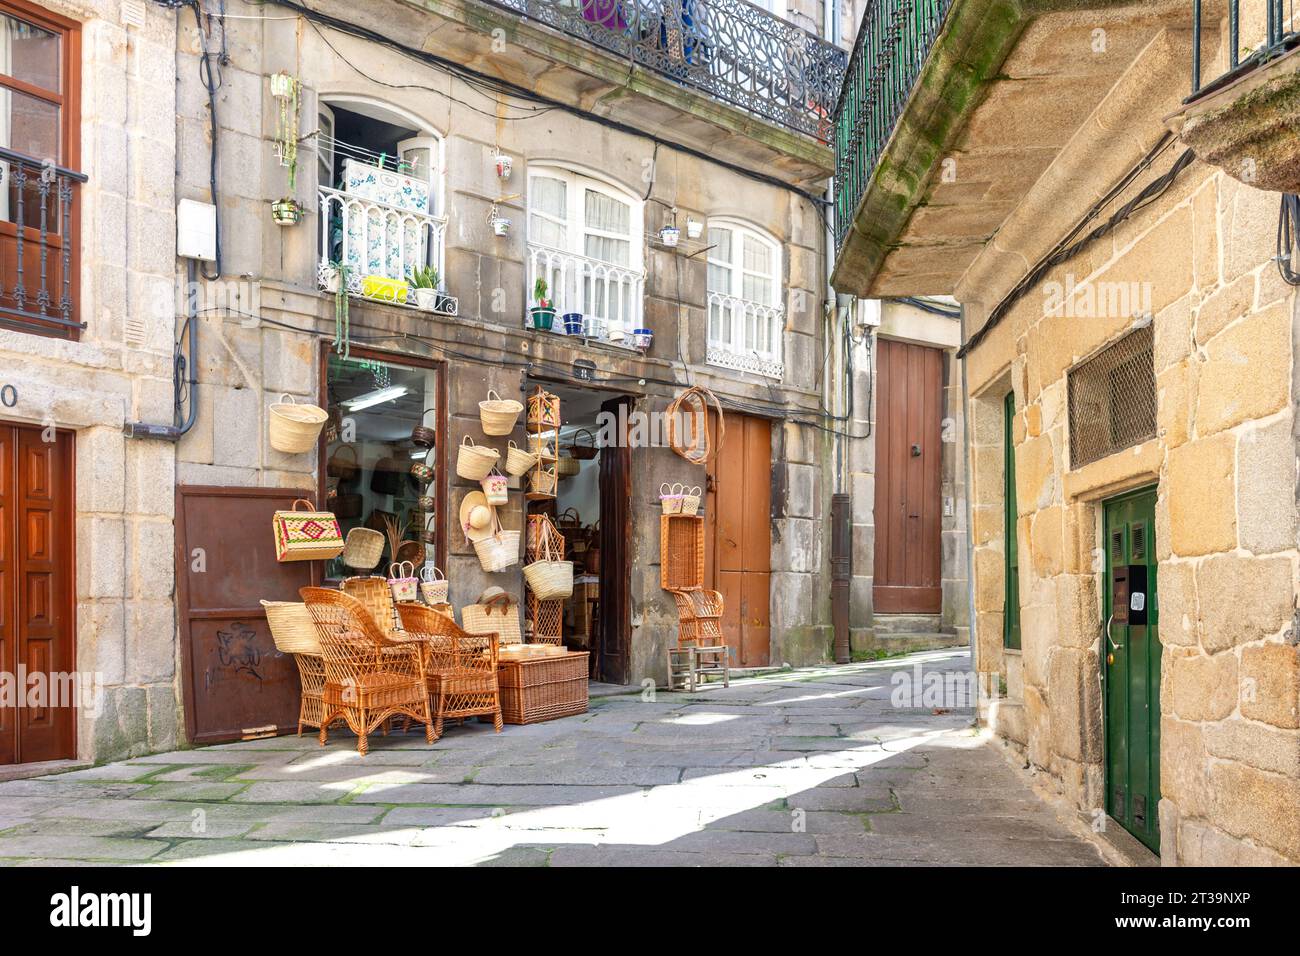 Wicker handicraft shop in Old Town, Vigo, Province of Pontevedra, Galicia, Kingdom of Spain Stock Photo